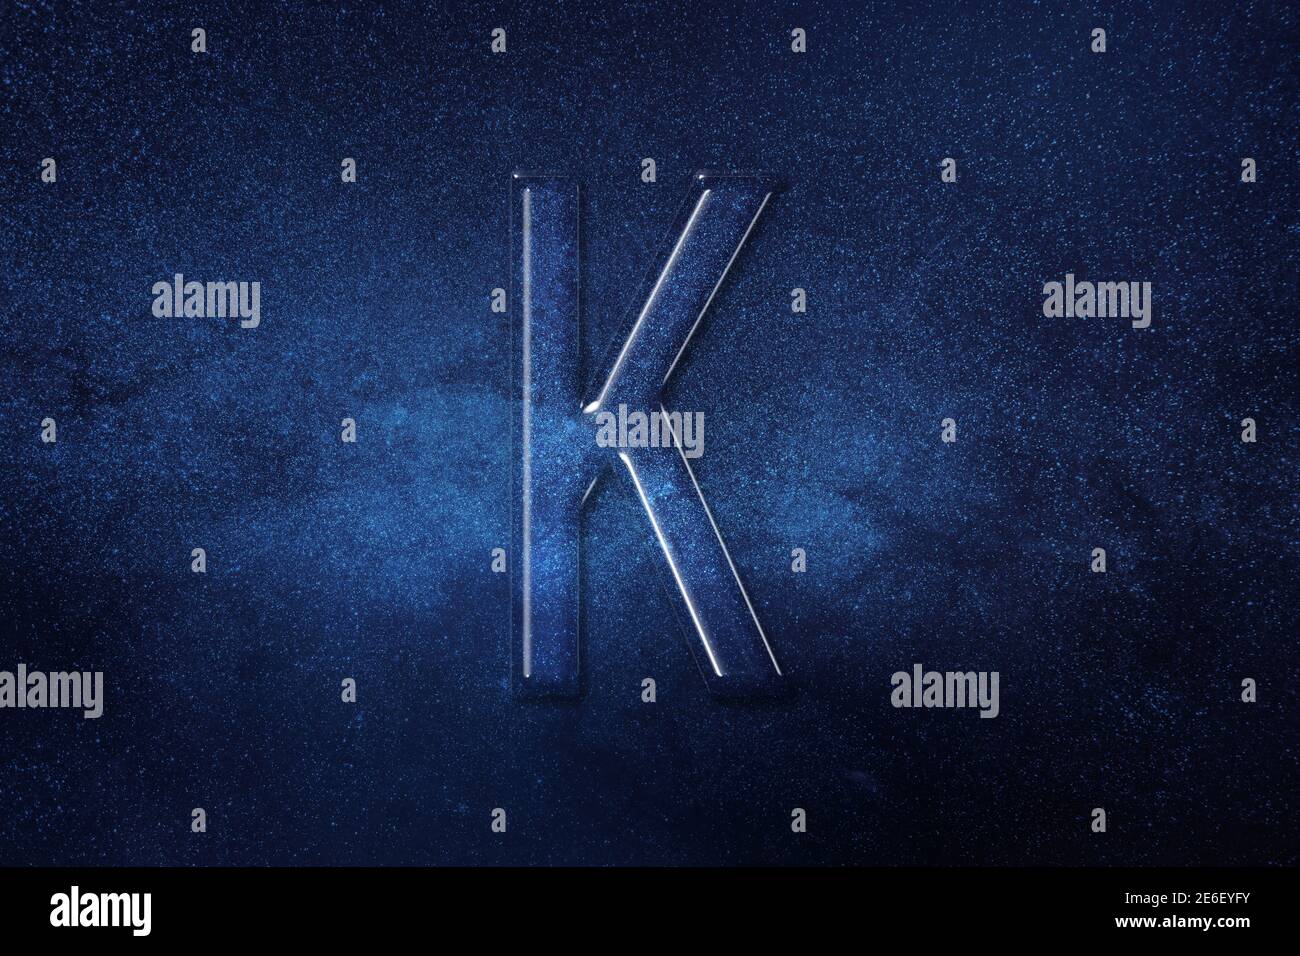 Kappa sign. Kappa letter, Greek alphabet Symbol, space background Stock Photo Alamy